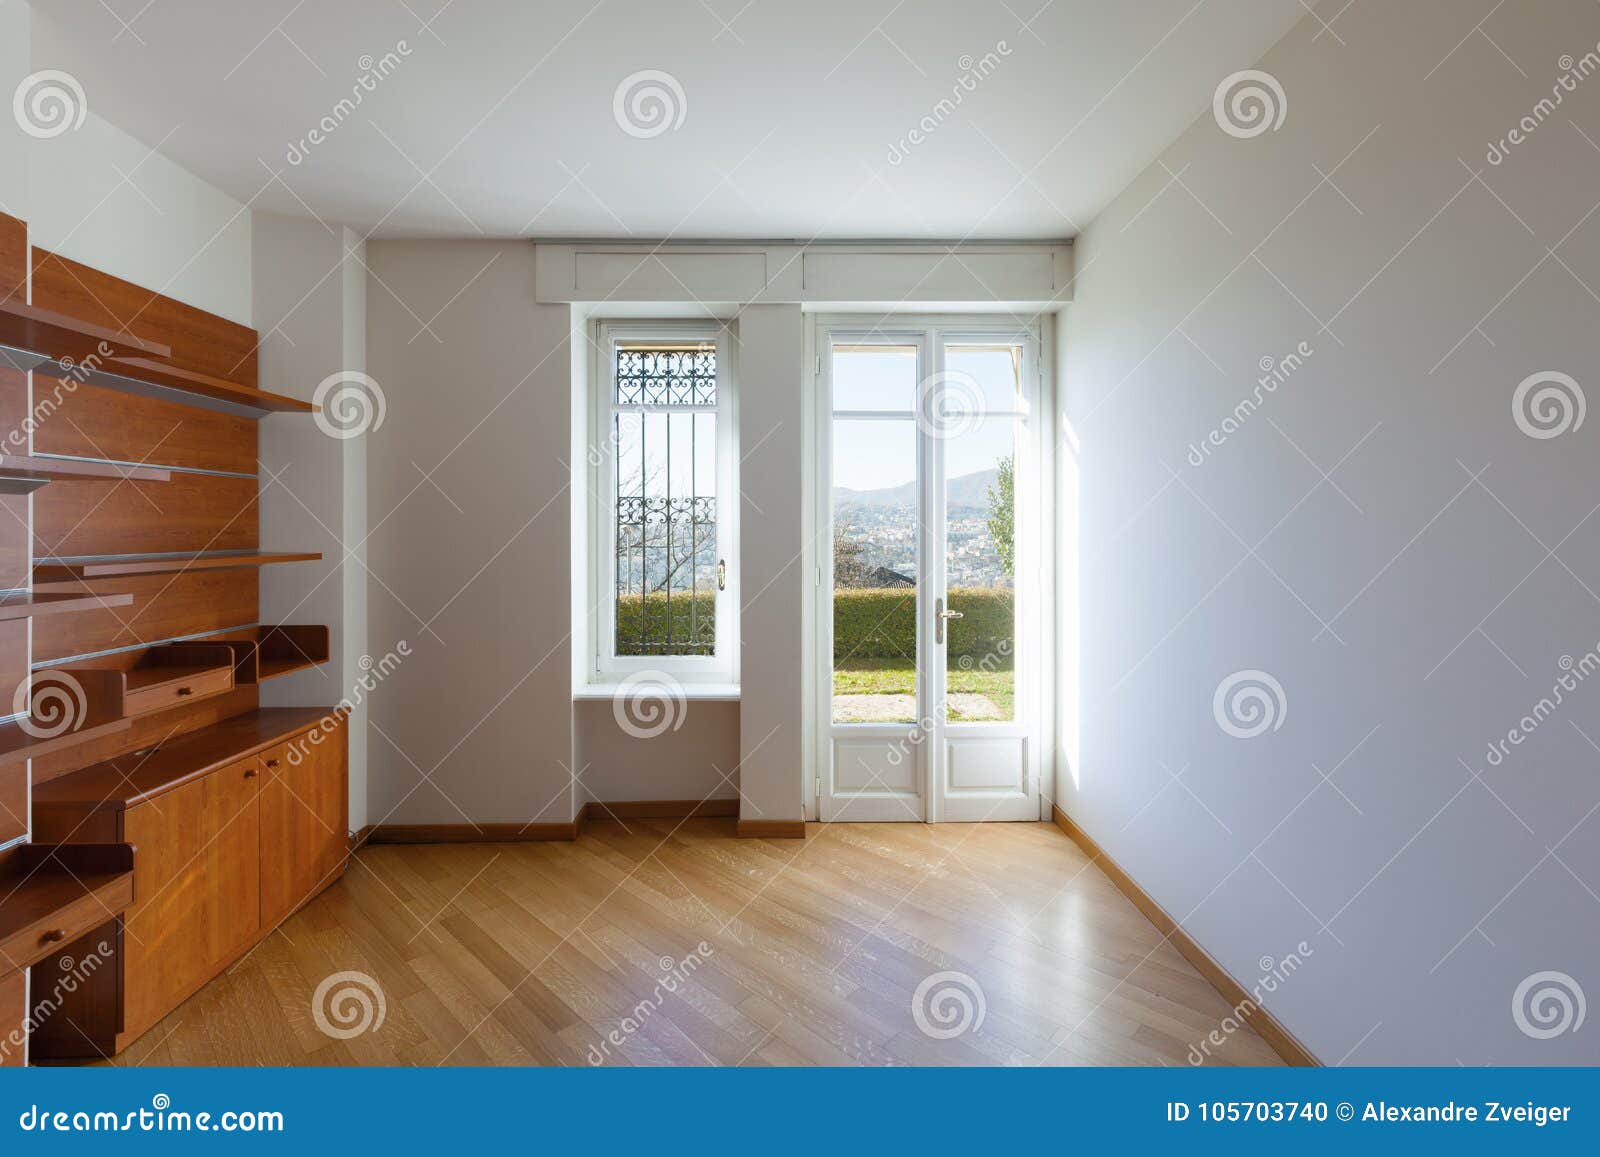 Empty White Room With Window Stock Photo Image Of Garden